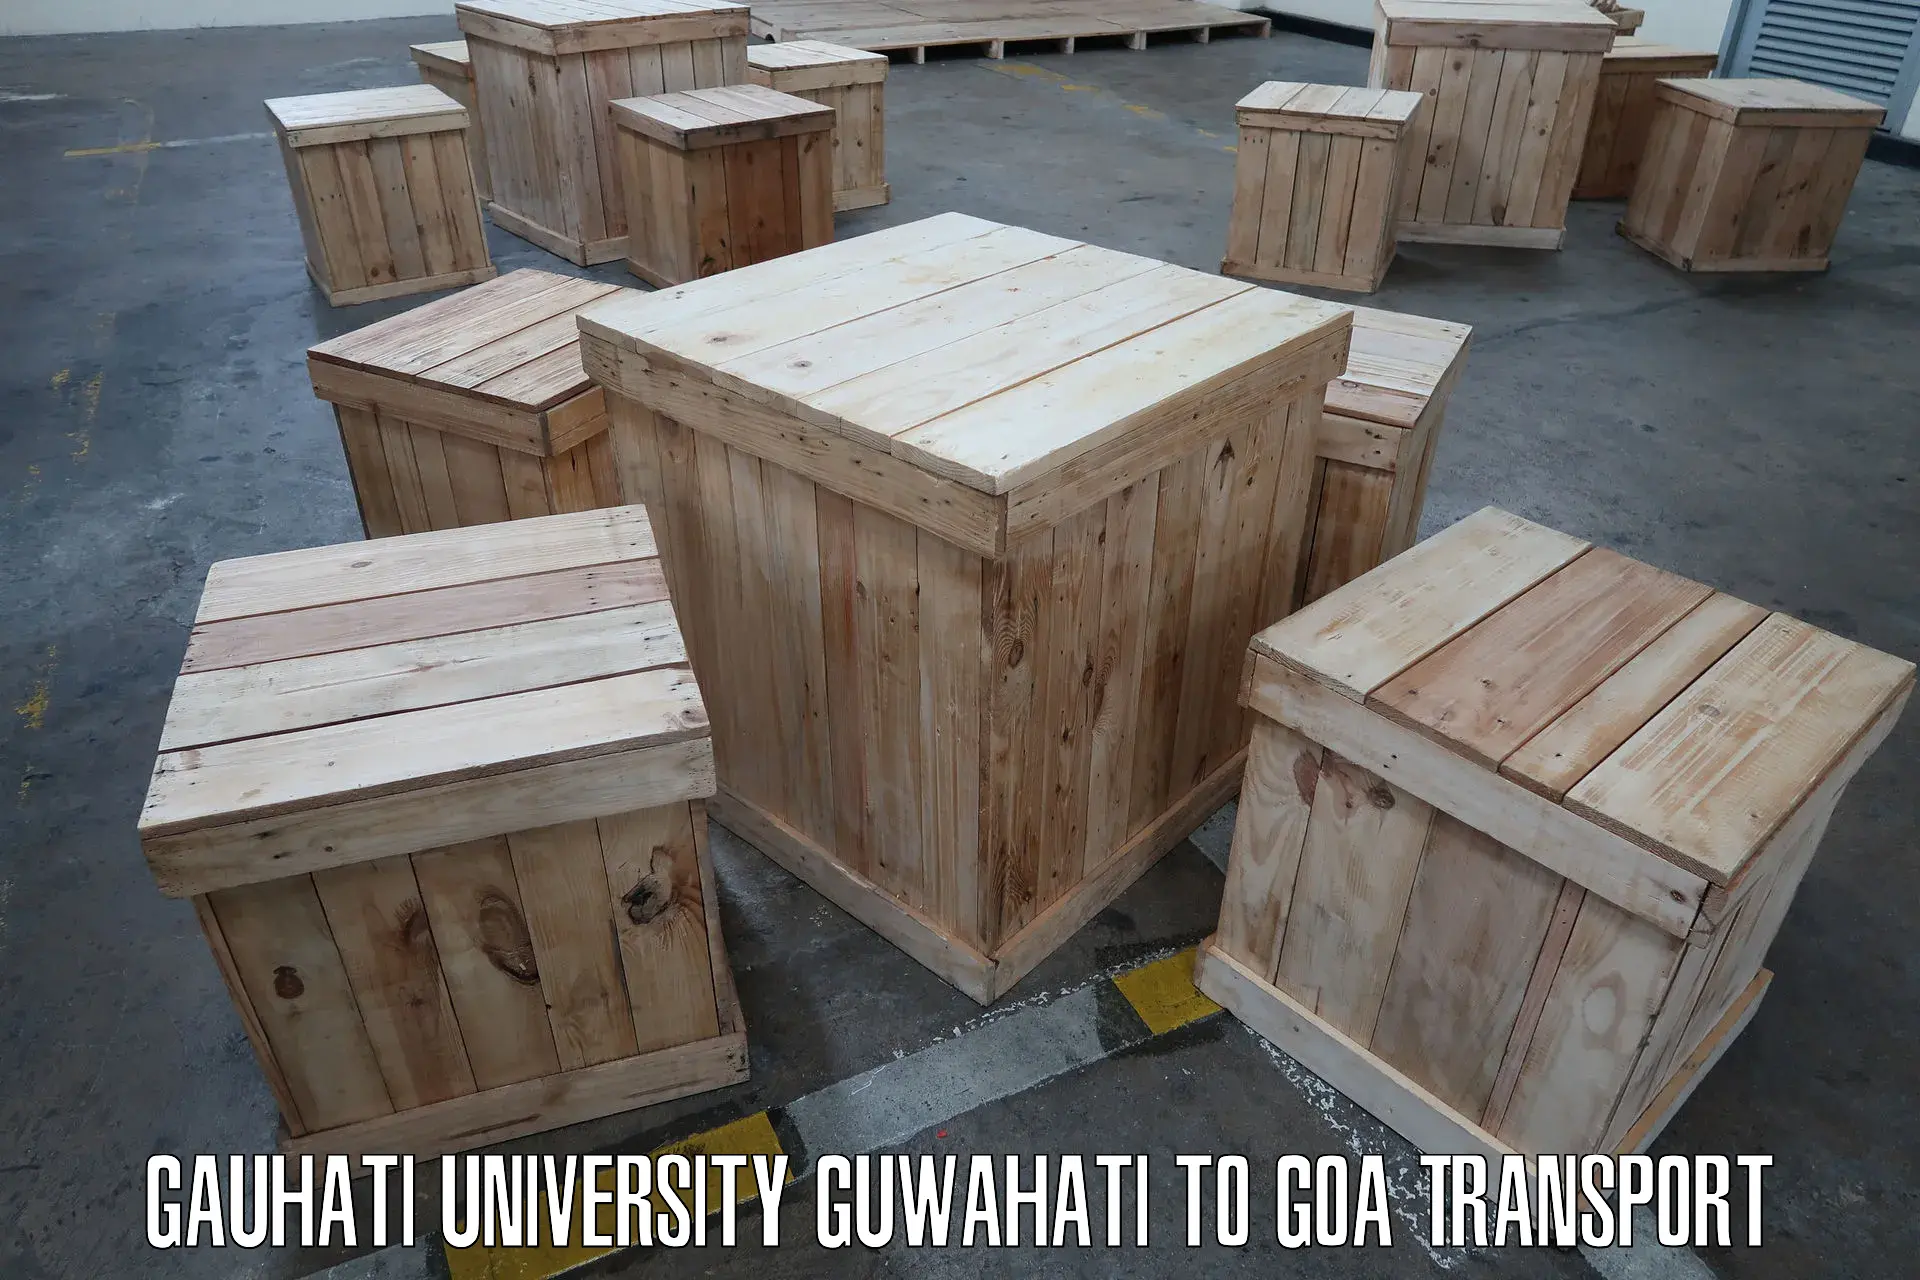 Transport in sharing Gauhati University Guwahati to IIT Goa